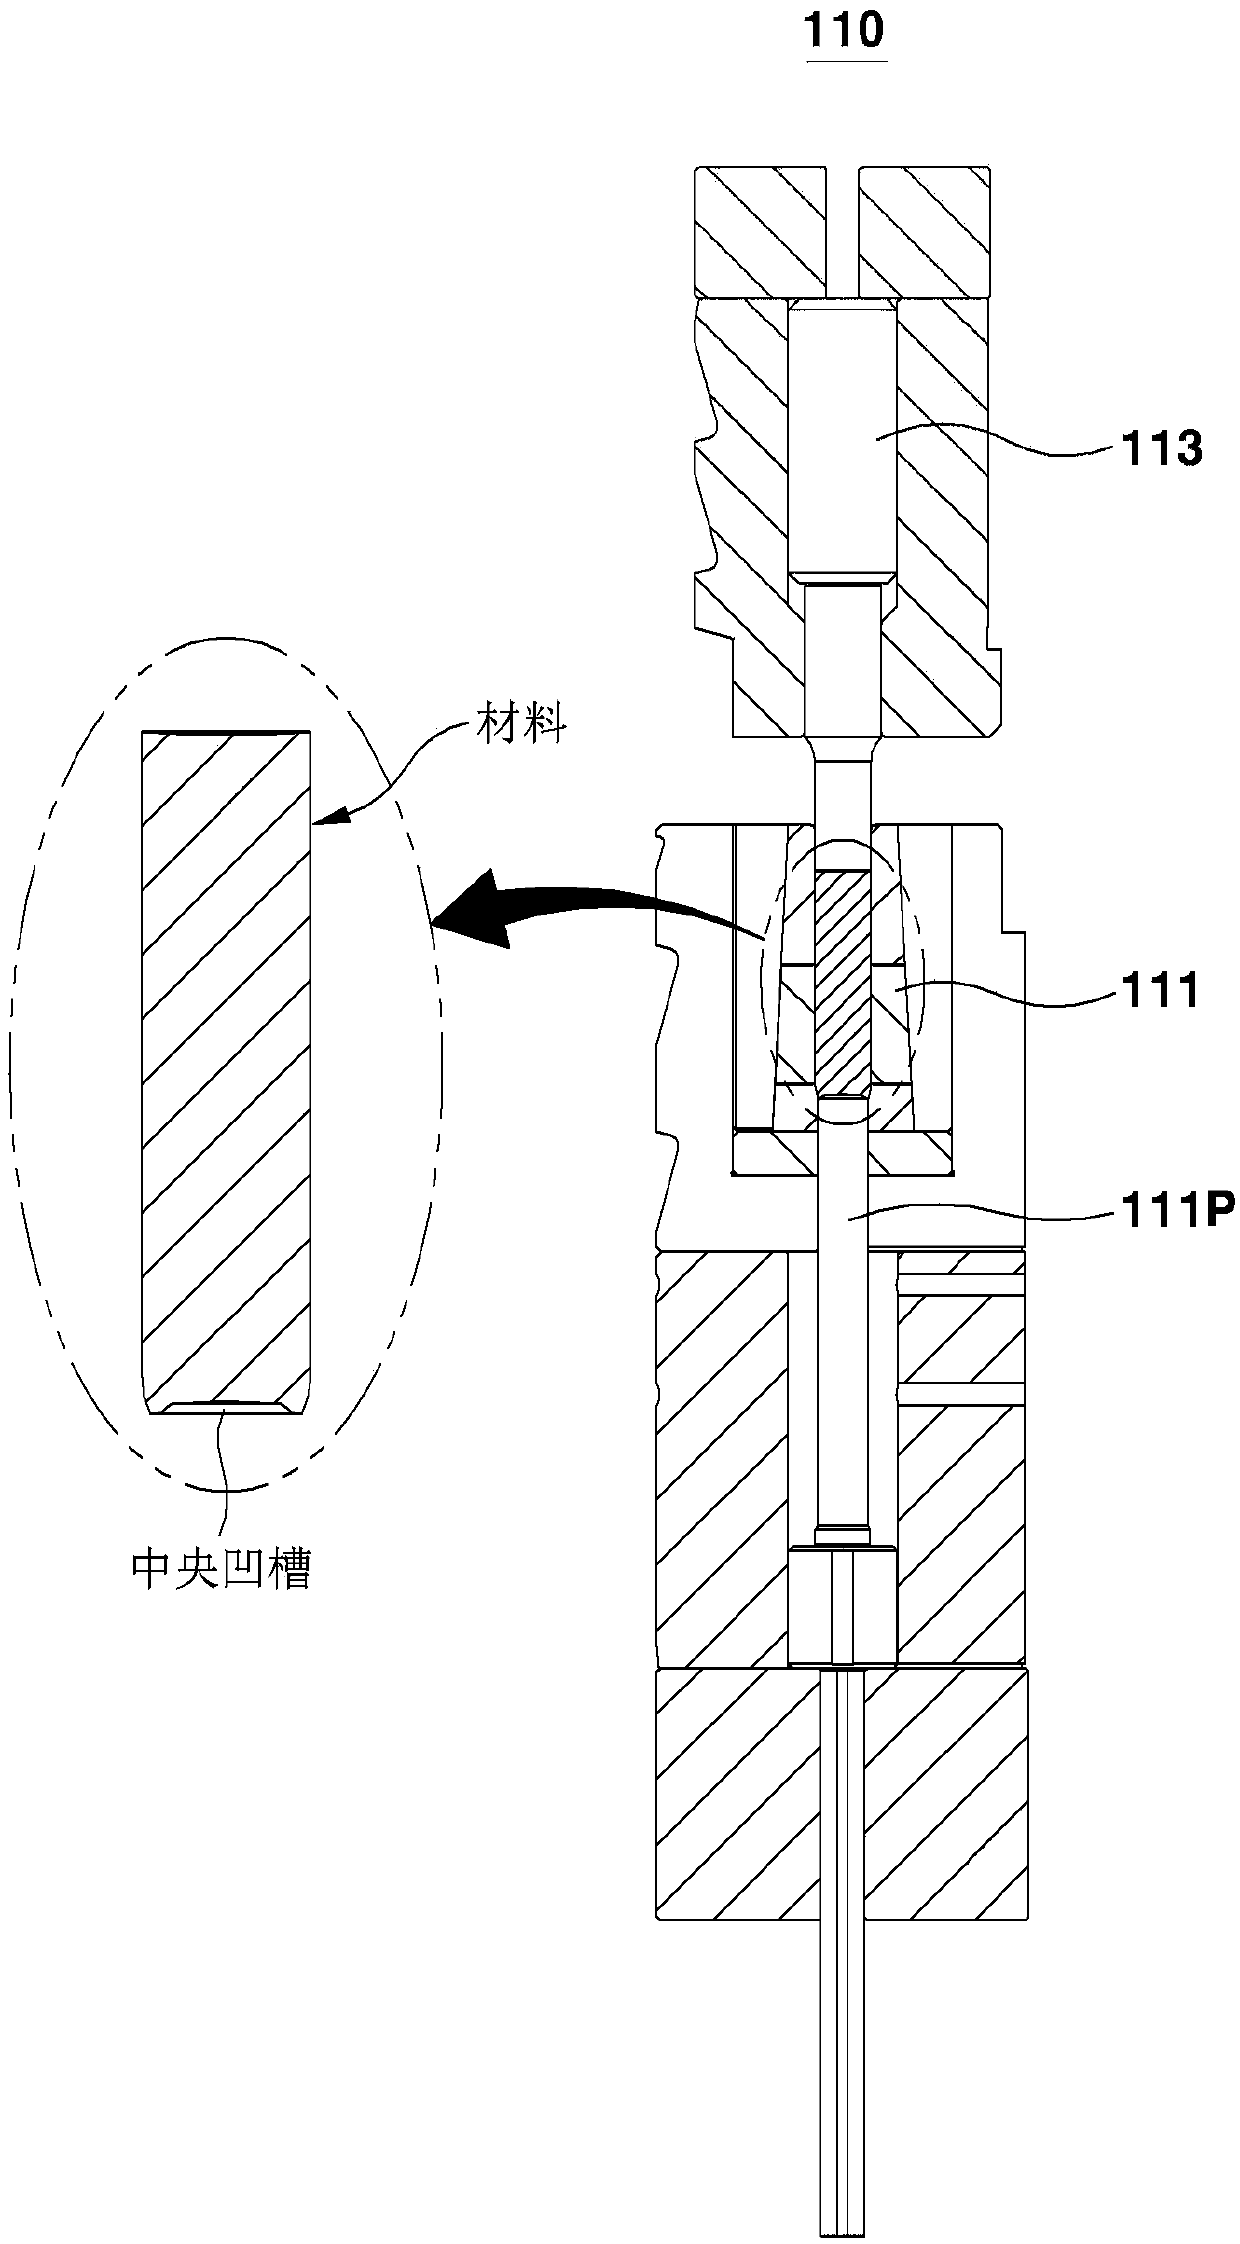 Apparatus for manufacturing tube yoke